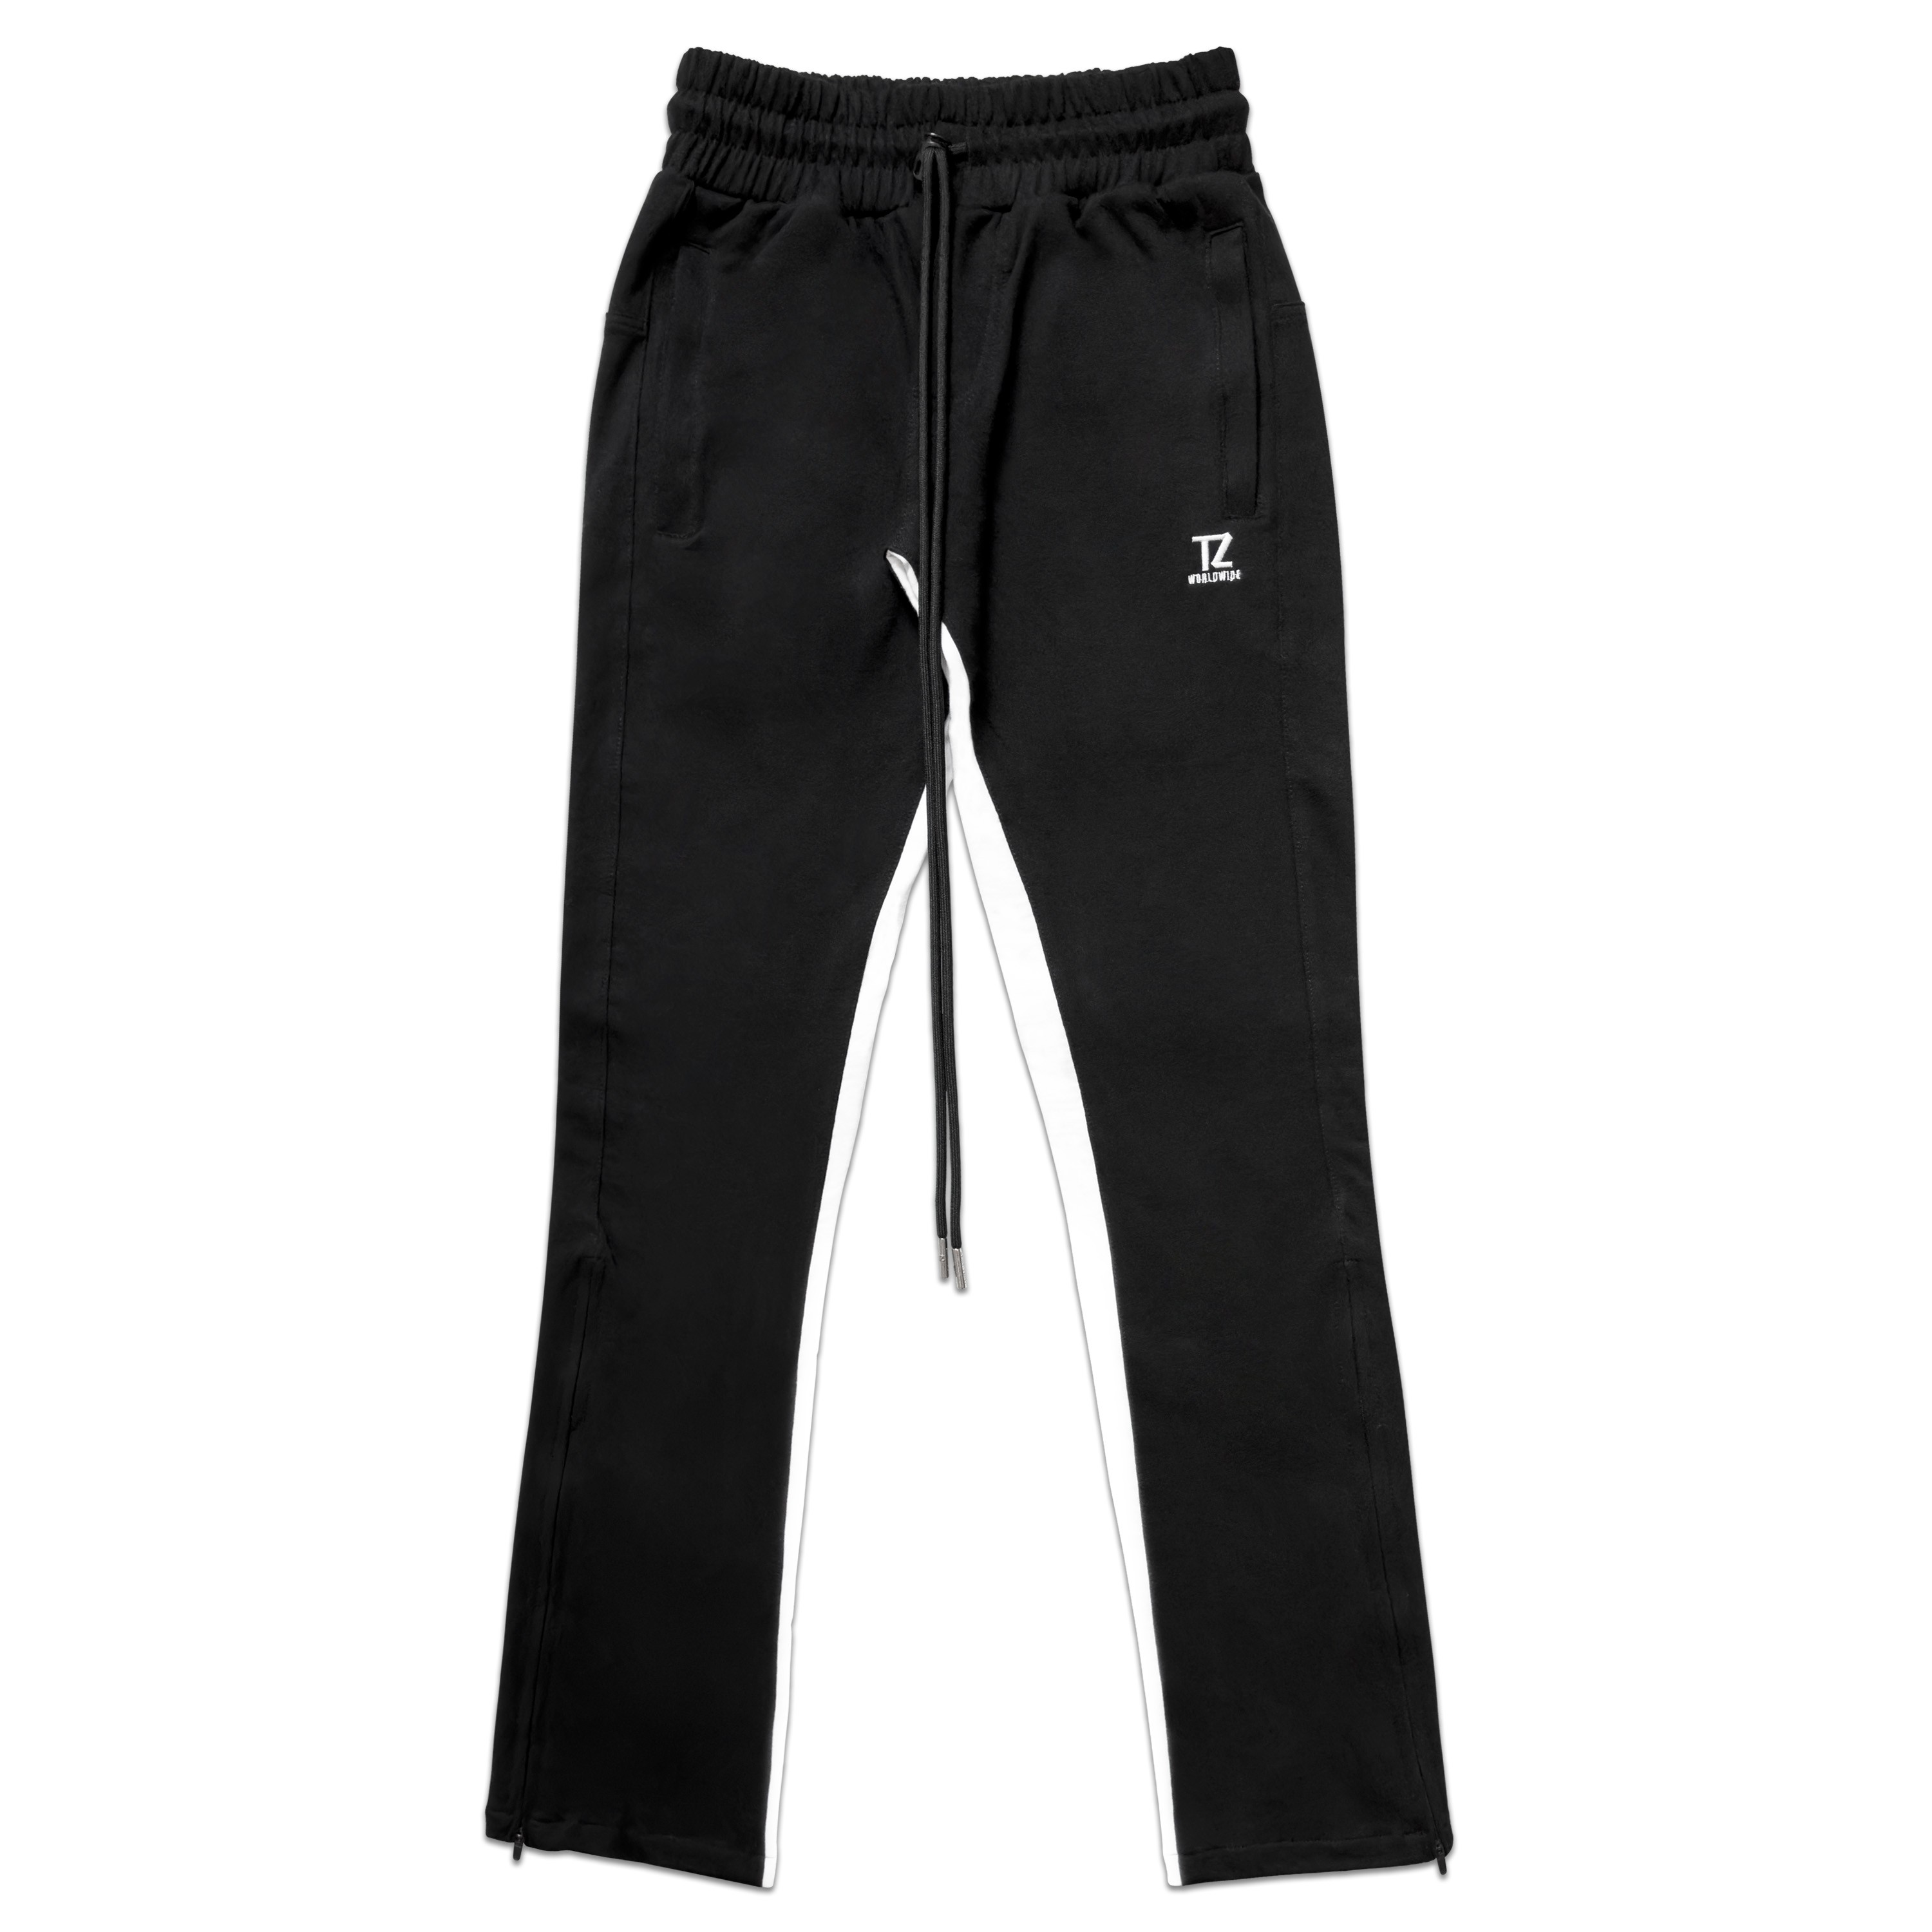 TZ Sweater Pants (Slim Fit Bootcut) Size M